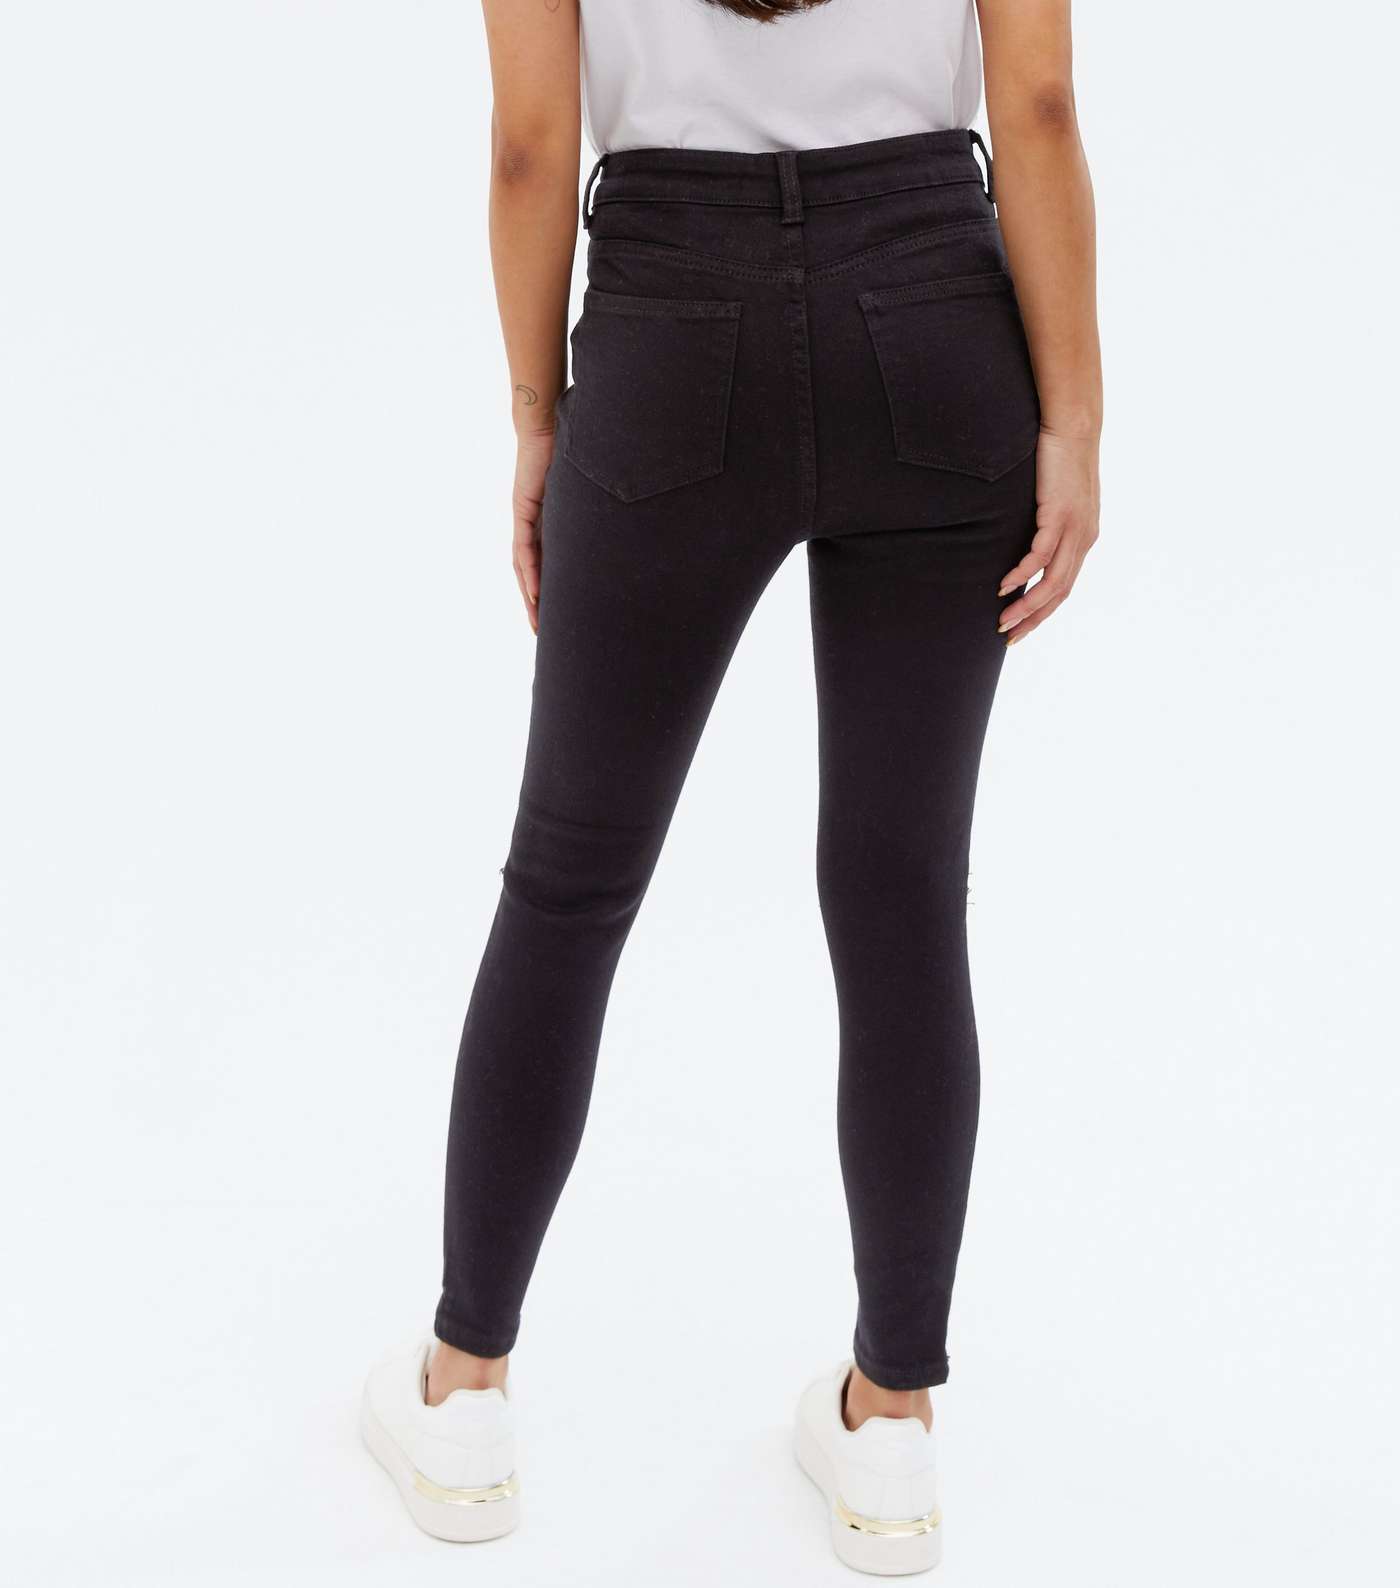 Petite Black Ripped High Waist Hallie Super Skinny Jeans Image 4